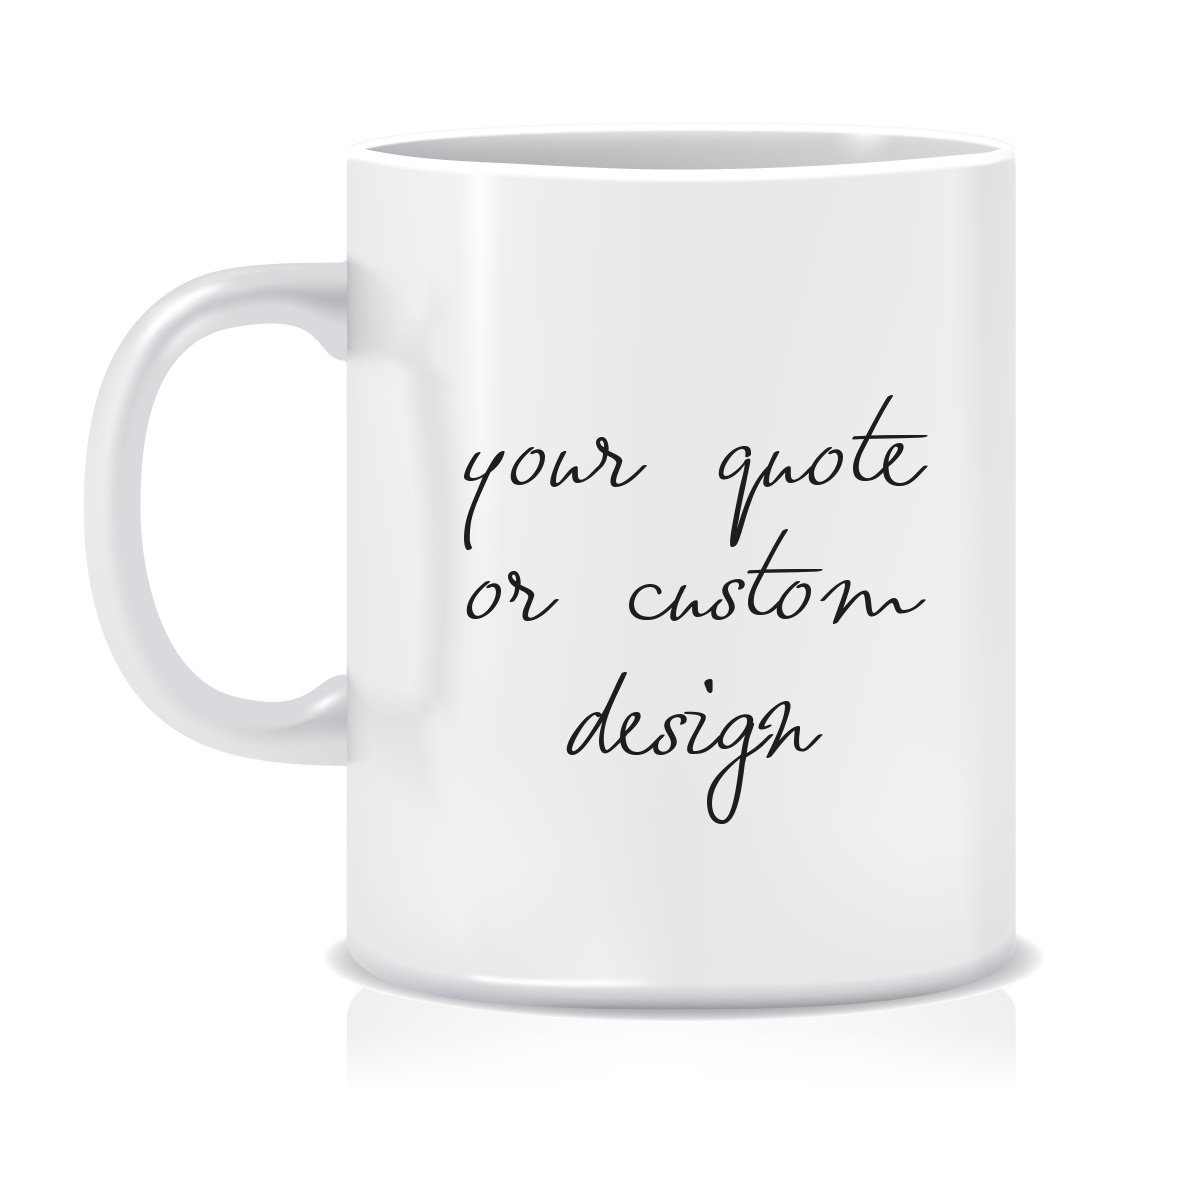 Image of Custom designed mug